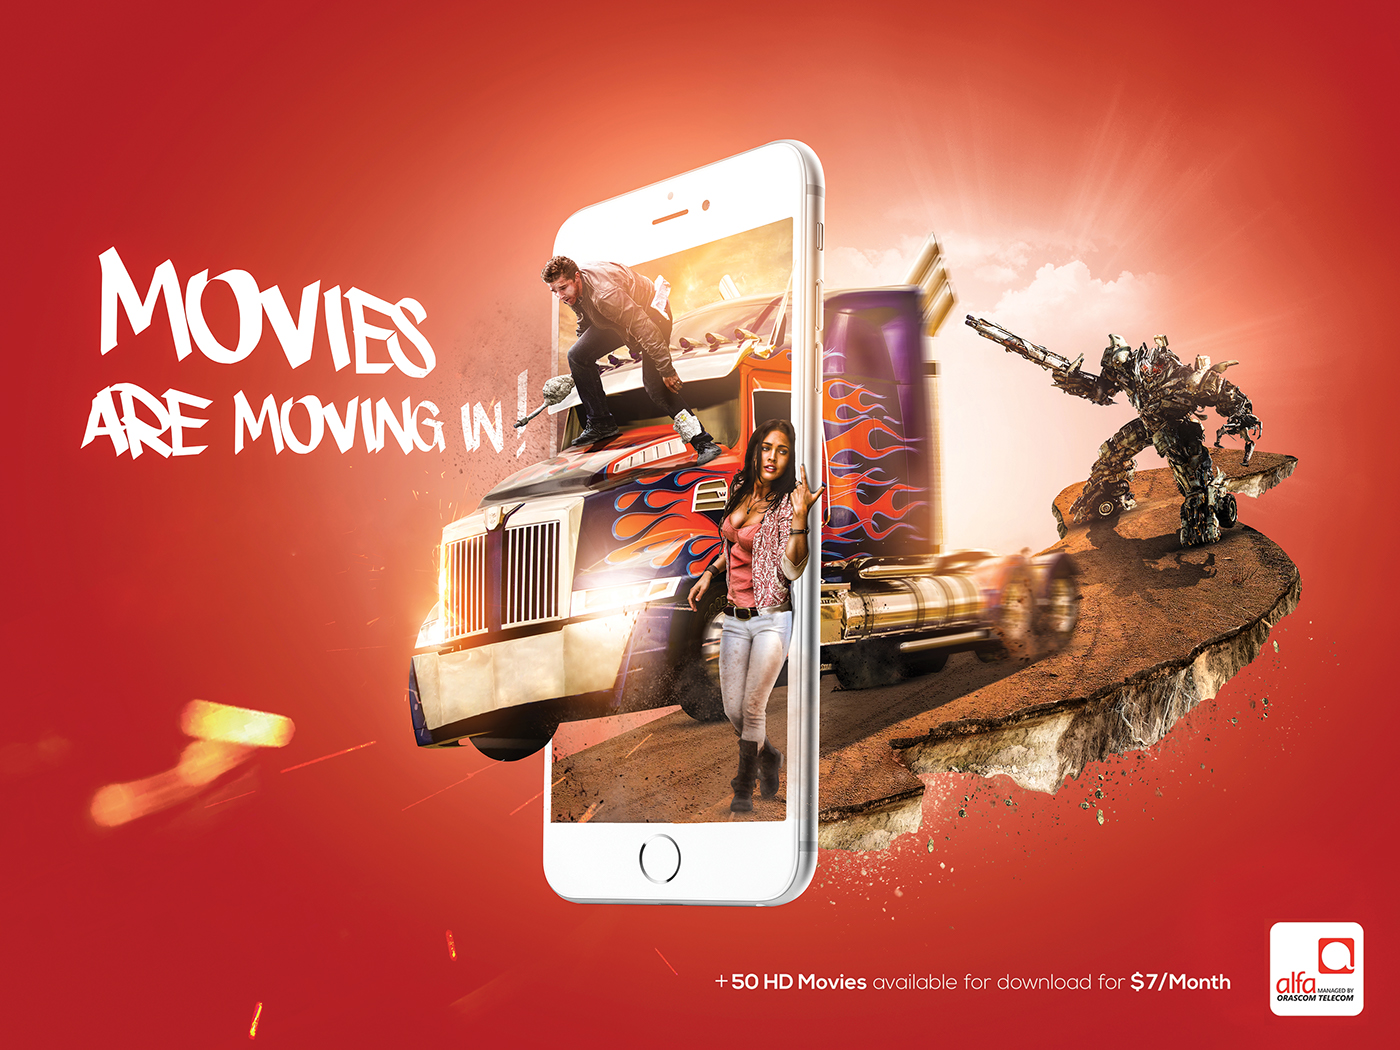 alfa telecommunications Telecom ad lebanon movie Transformers megan fox call phone iphone